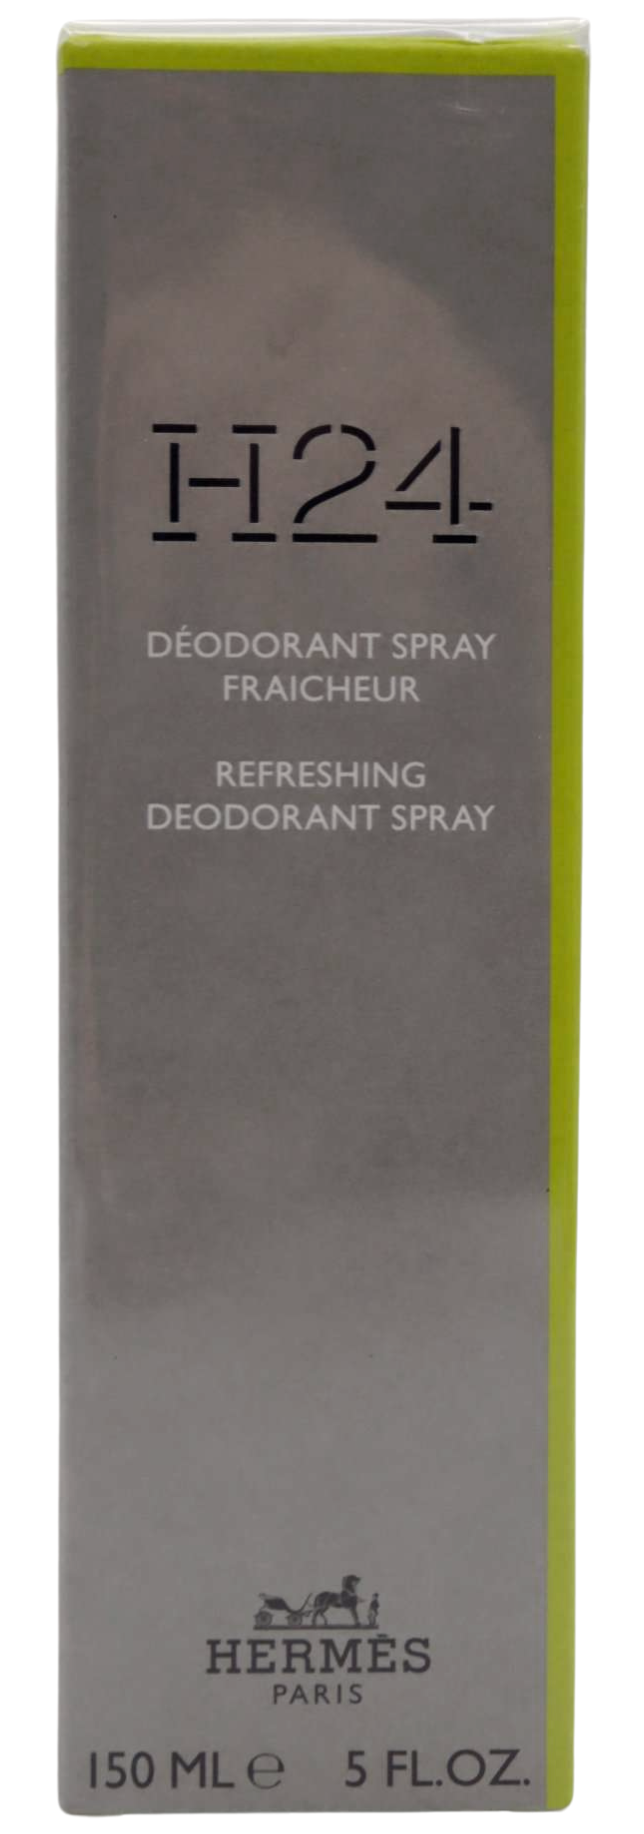 Hermès H24 Refreshing Deodorant Spray 150 ml